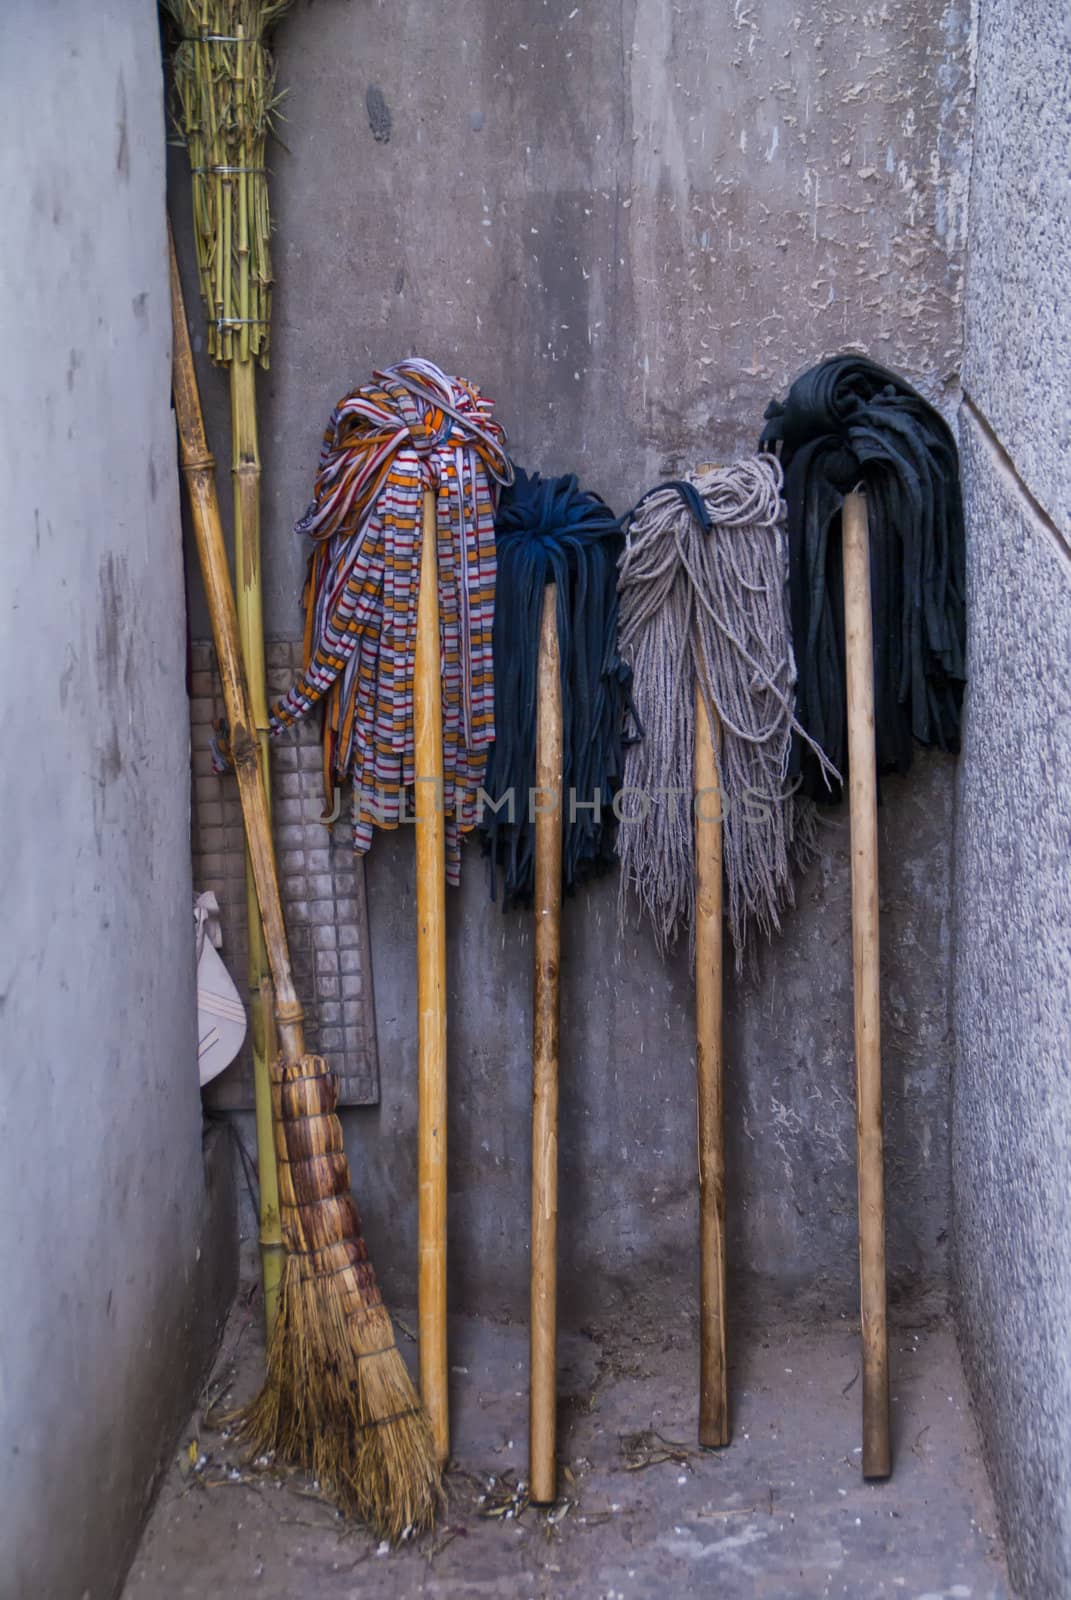 Beijing collection of brooms.